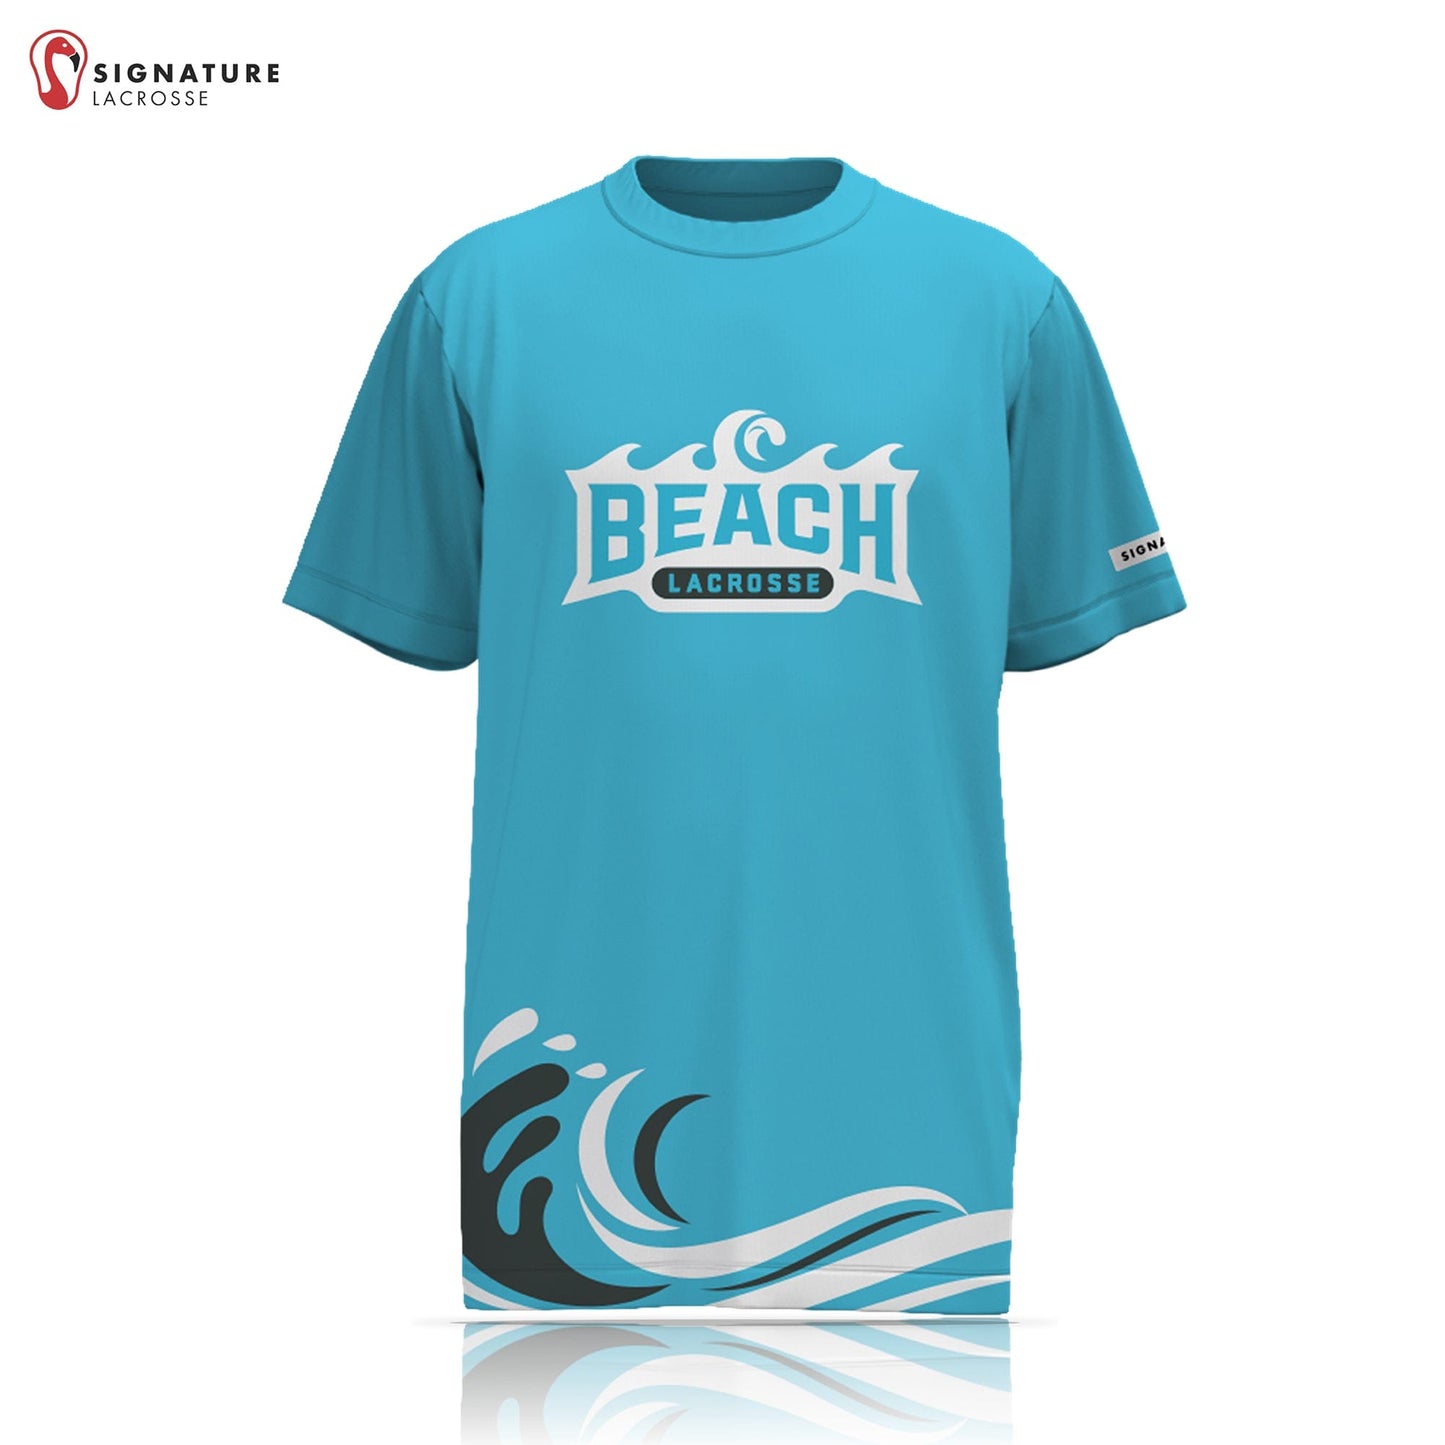 Beach Lacrosse Women's Short Sleeve Shooting Shirt: 10U Signature Lacrosse